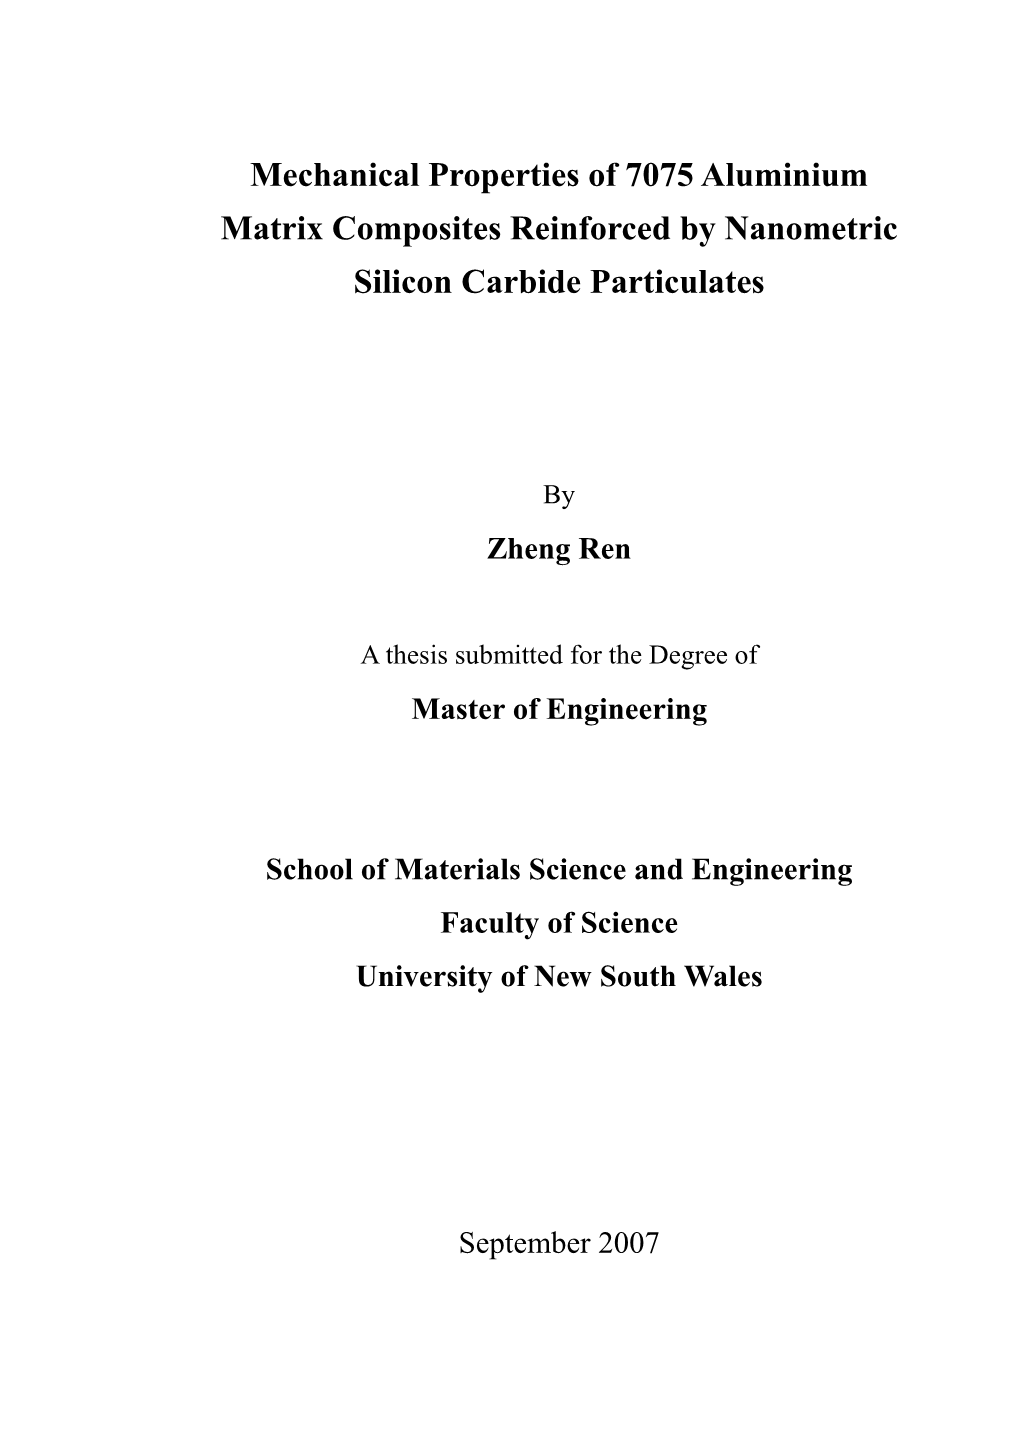 Mechanical Properties of 7075 Aluminium Matrix Composites Reinforced by Nanometric Silicon Carbide Particulates